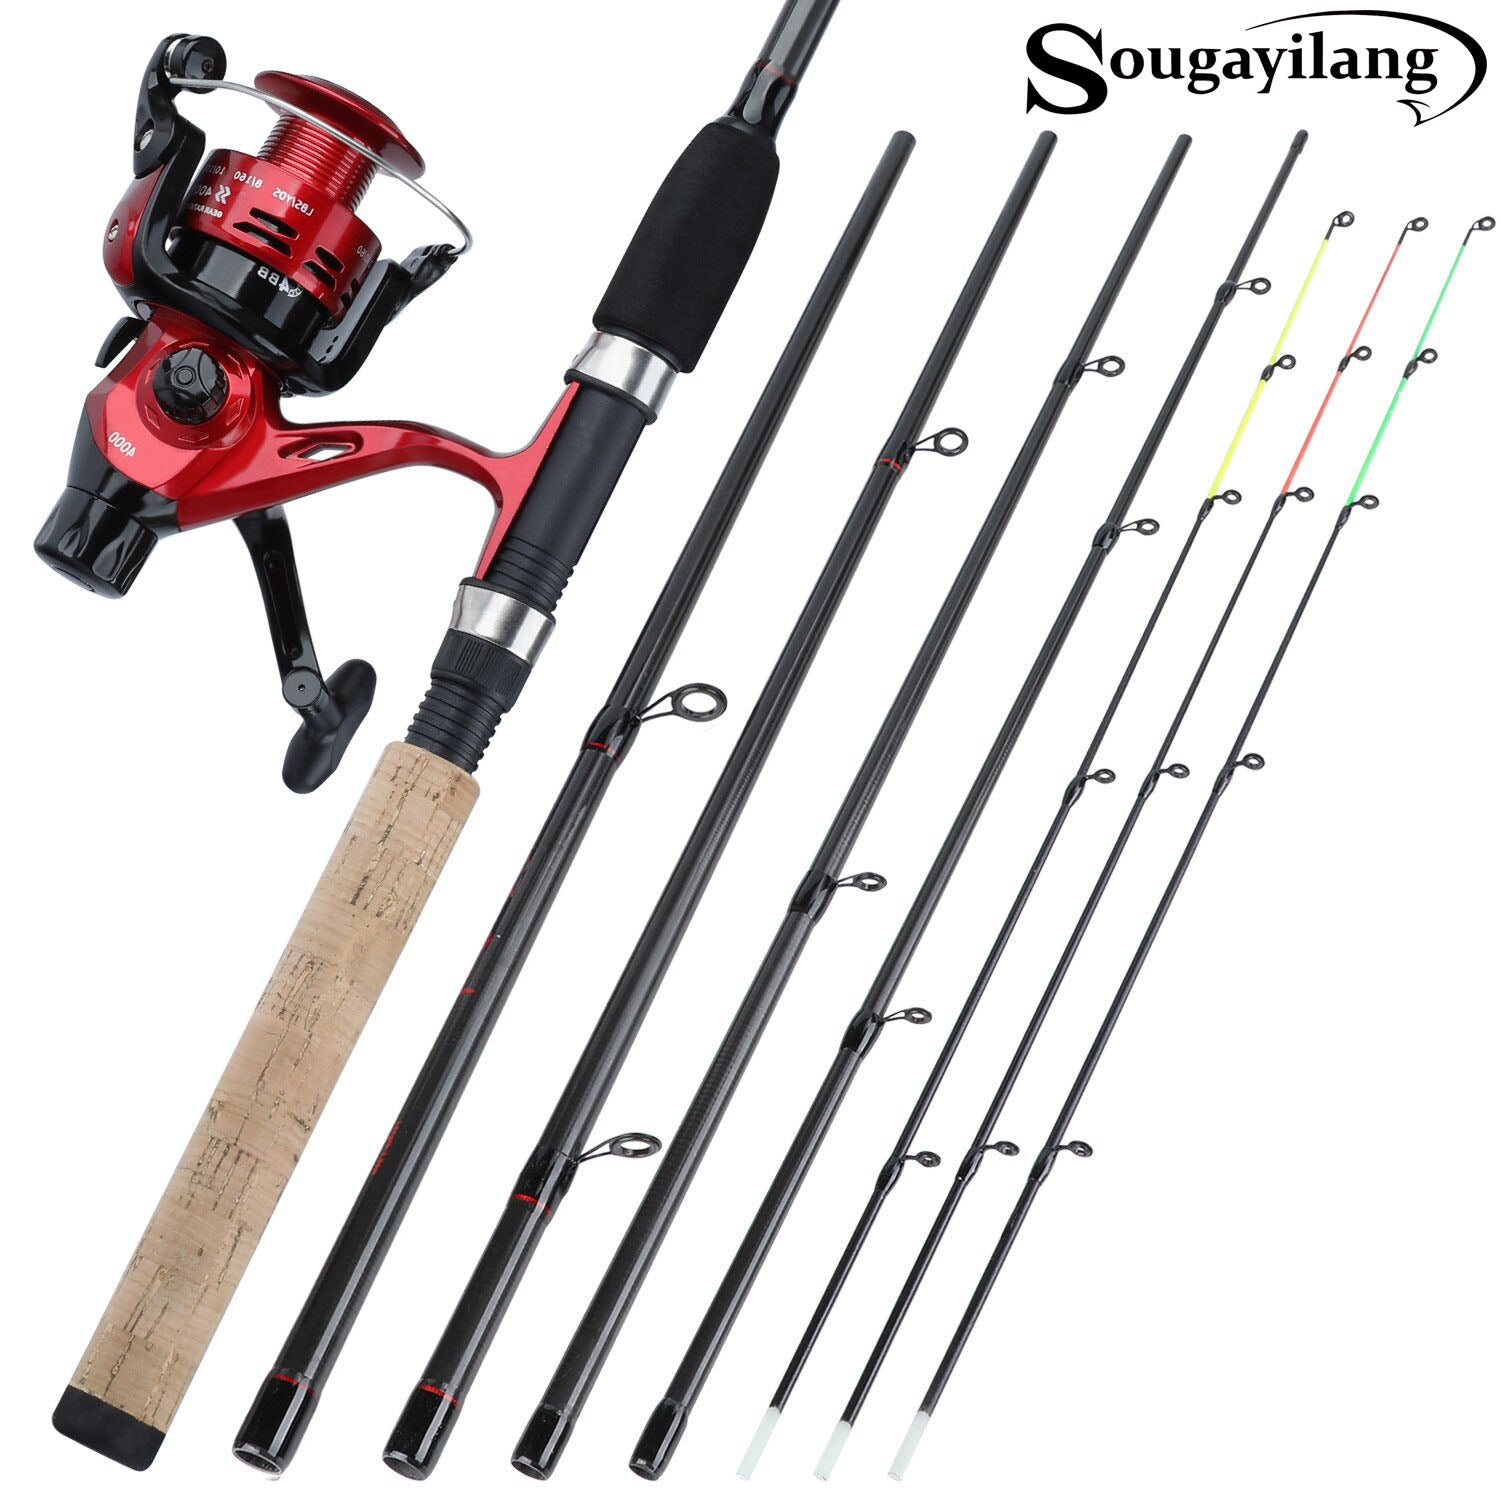 Sougayilang Carp Fishing Rod Reel Combo 3M Spinning Feeder Fishing Rod with  3 Tips L M H Power and 4BB 5.2:1 Carp Fishing Reels